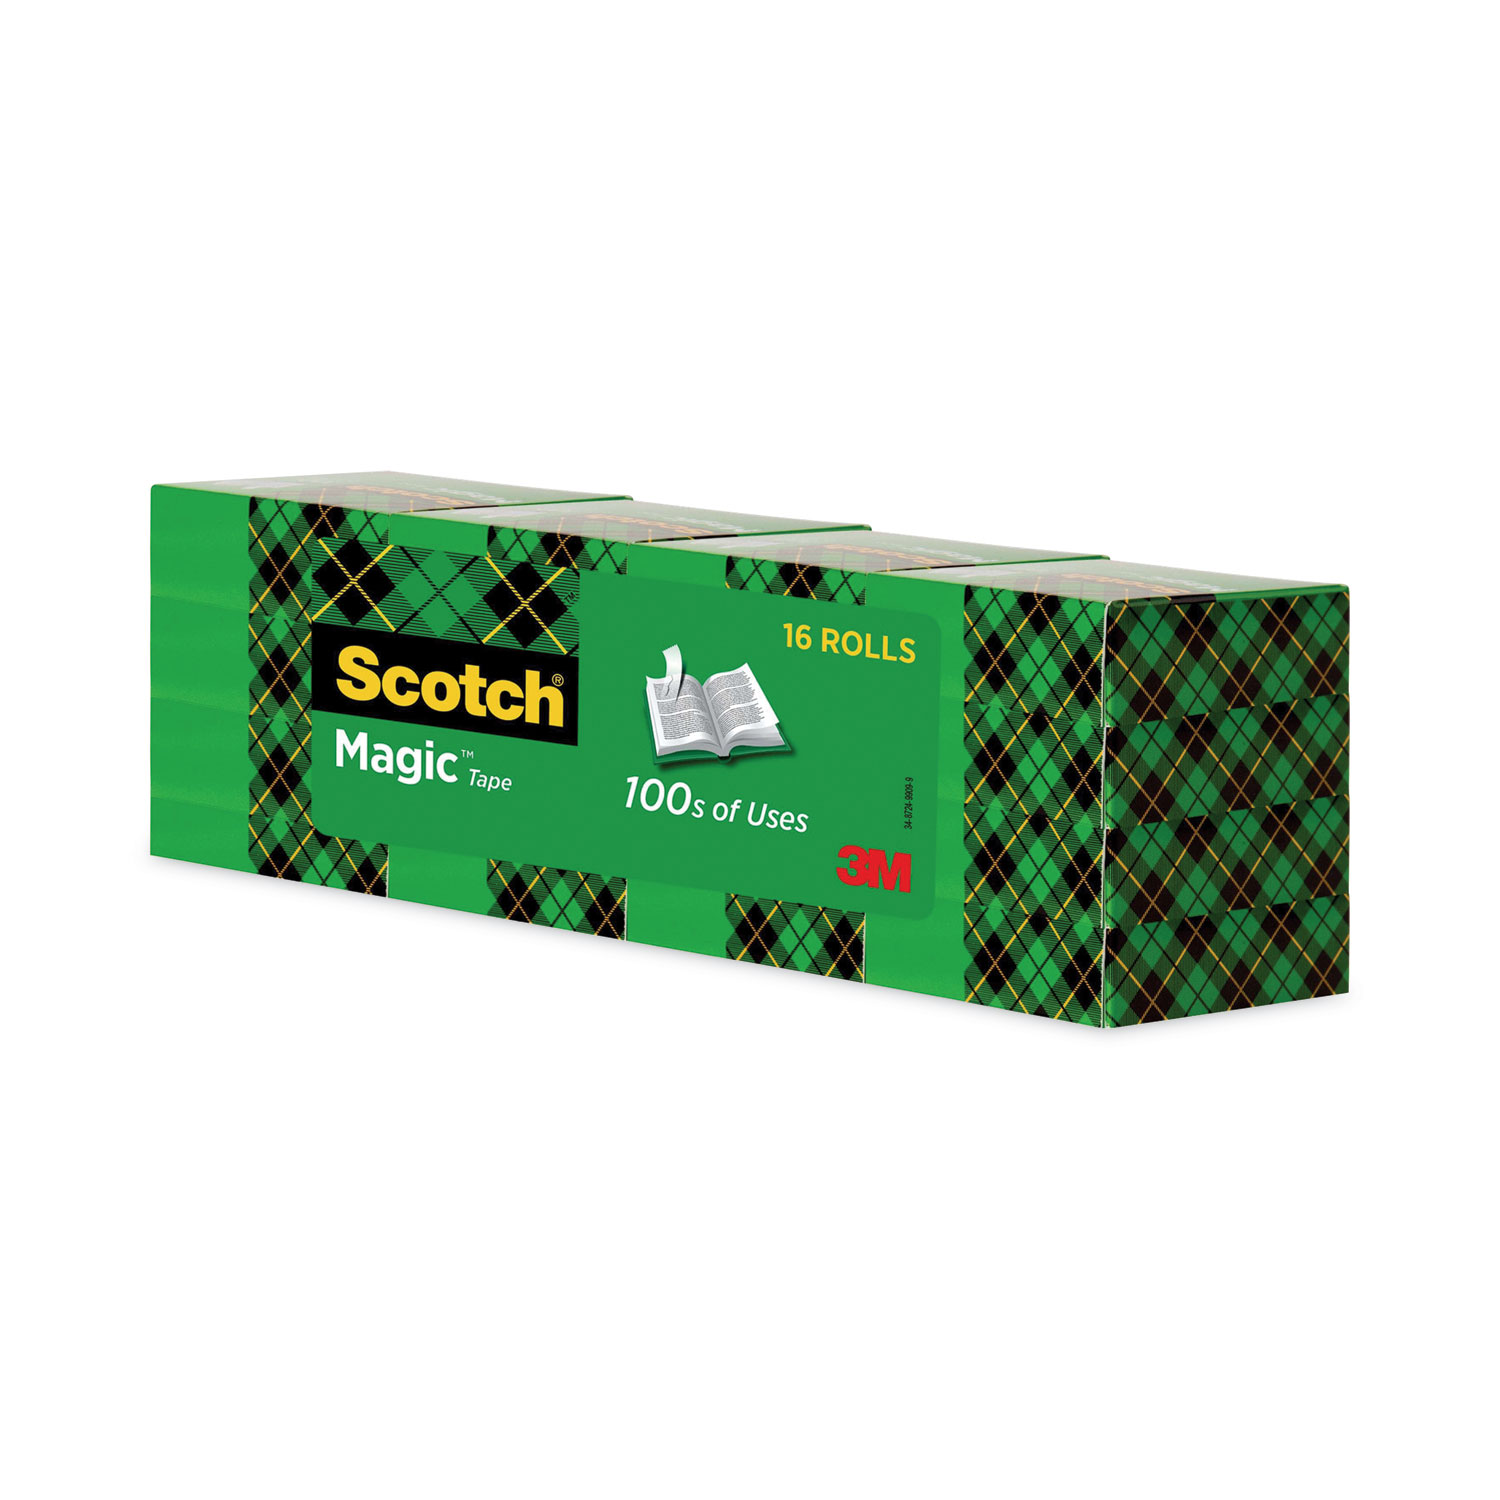 Scotch H127 Refillable Handheld Tape Dispenser, 1 Core, Plastic